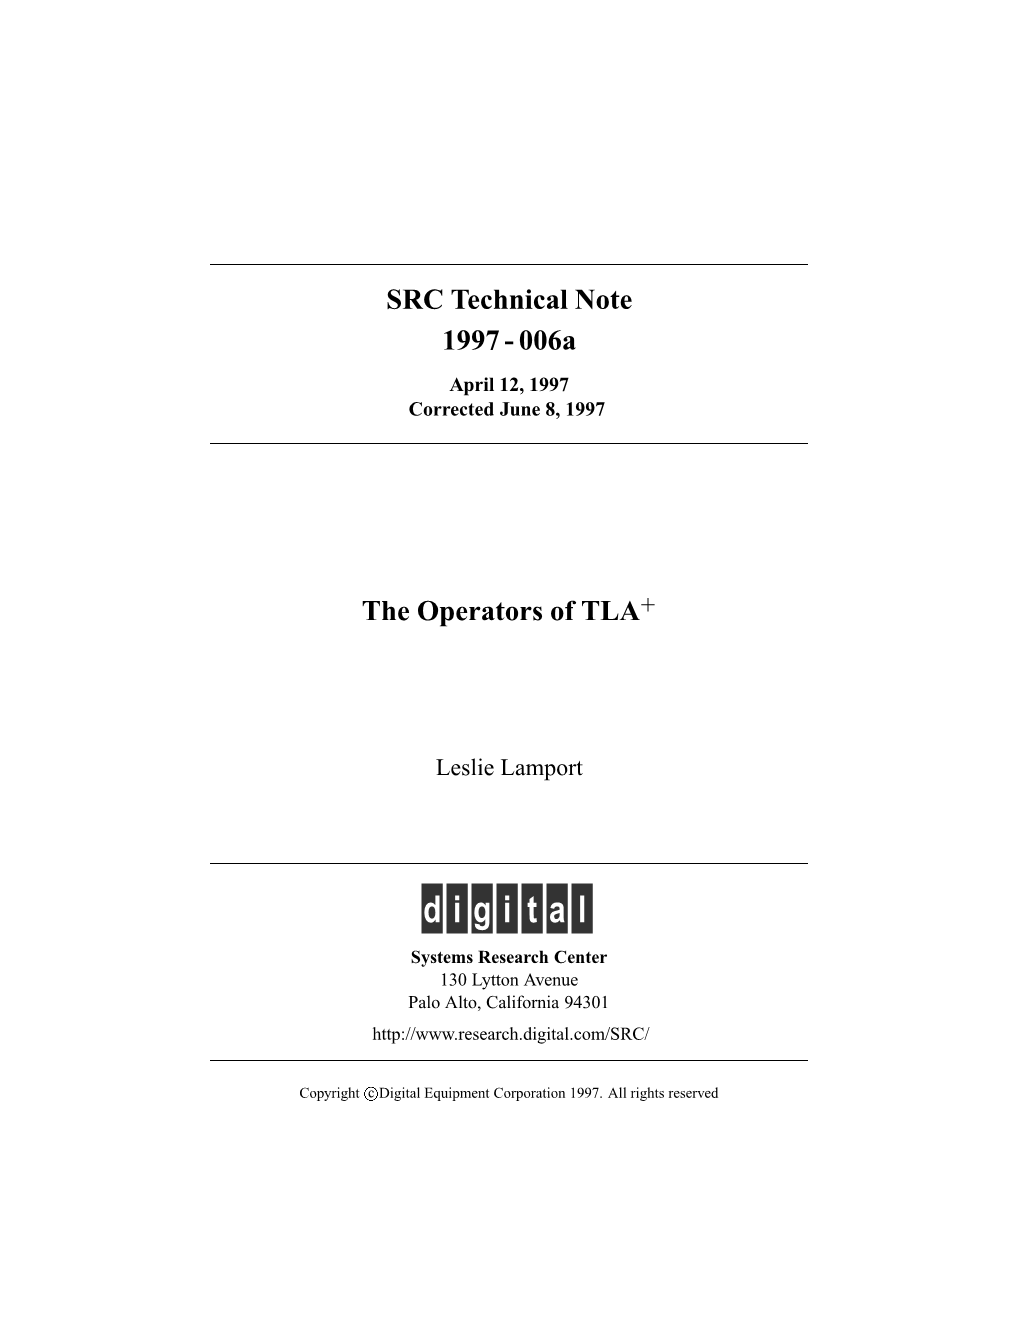 The Operators of TLA+